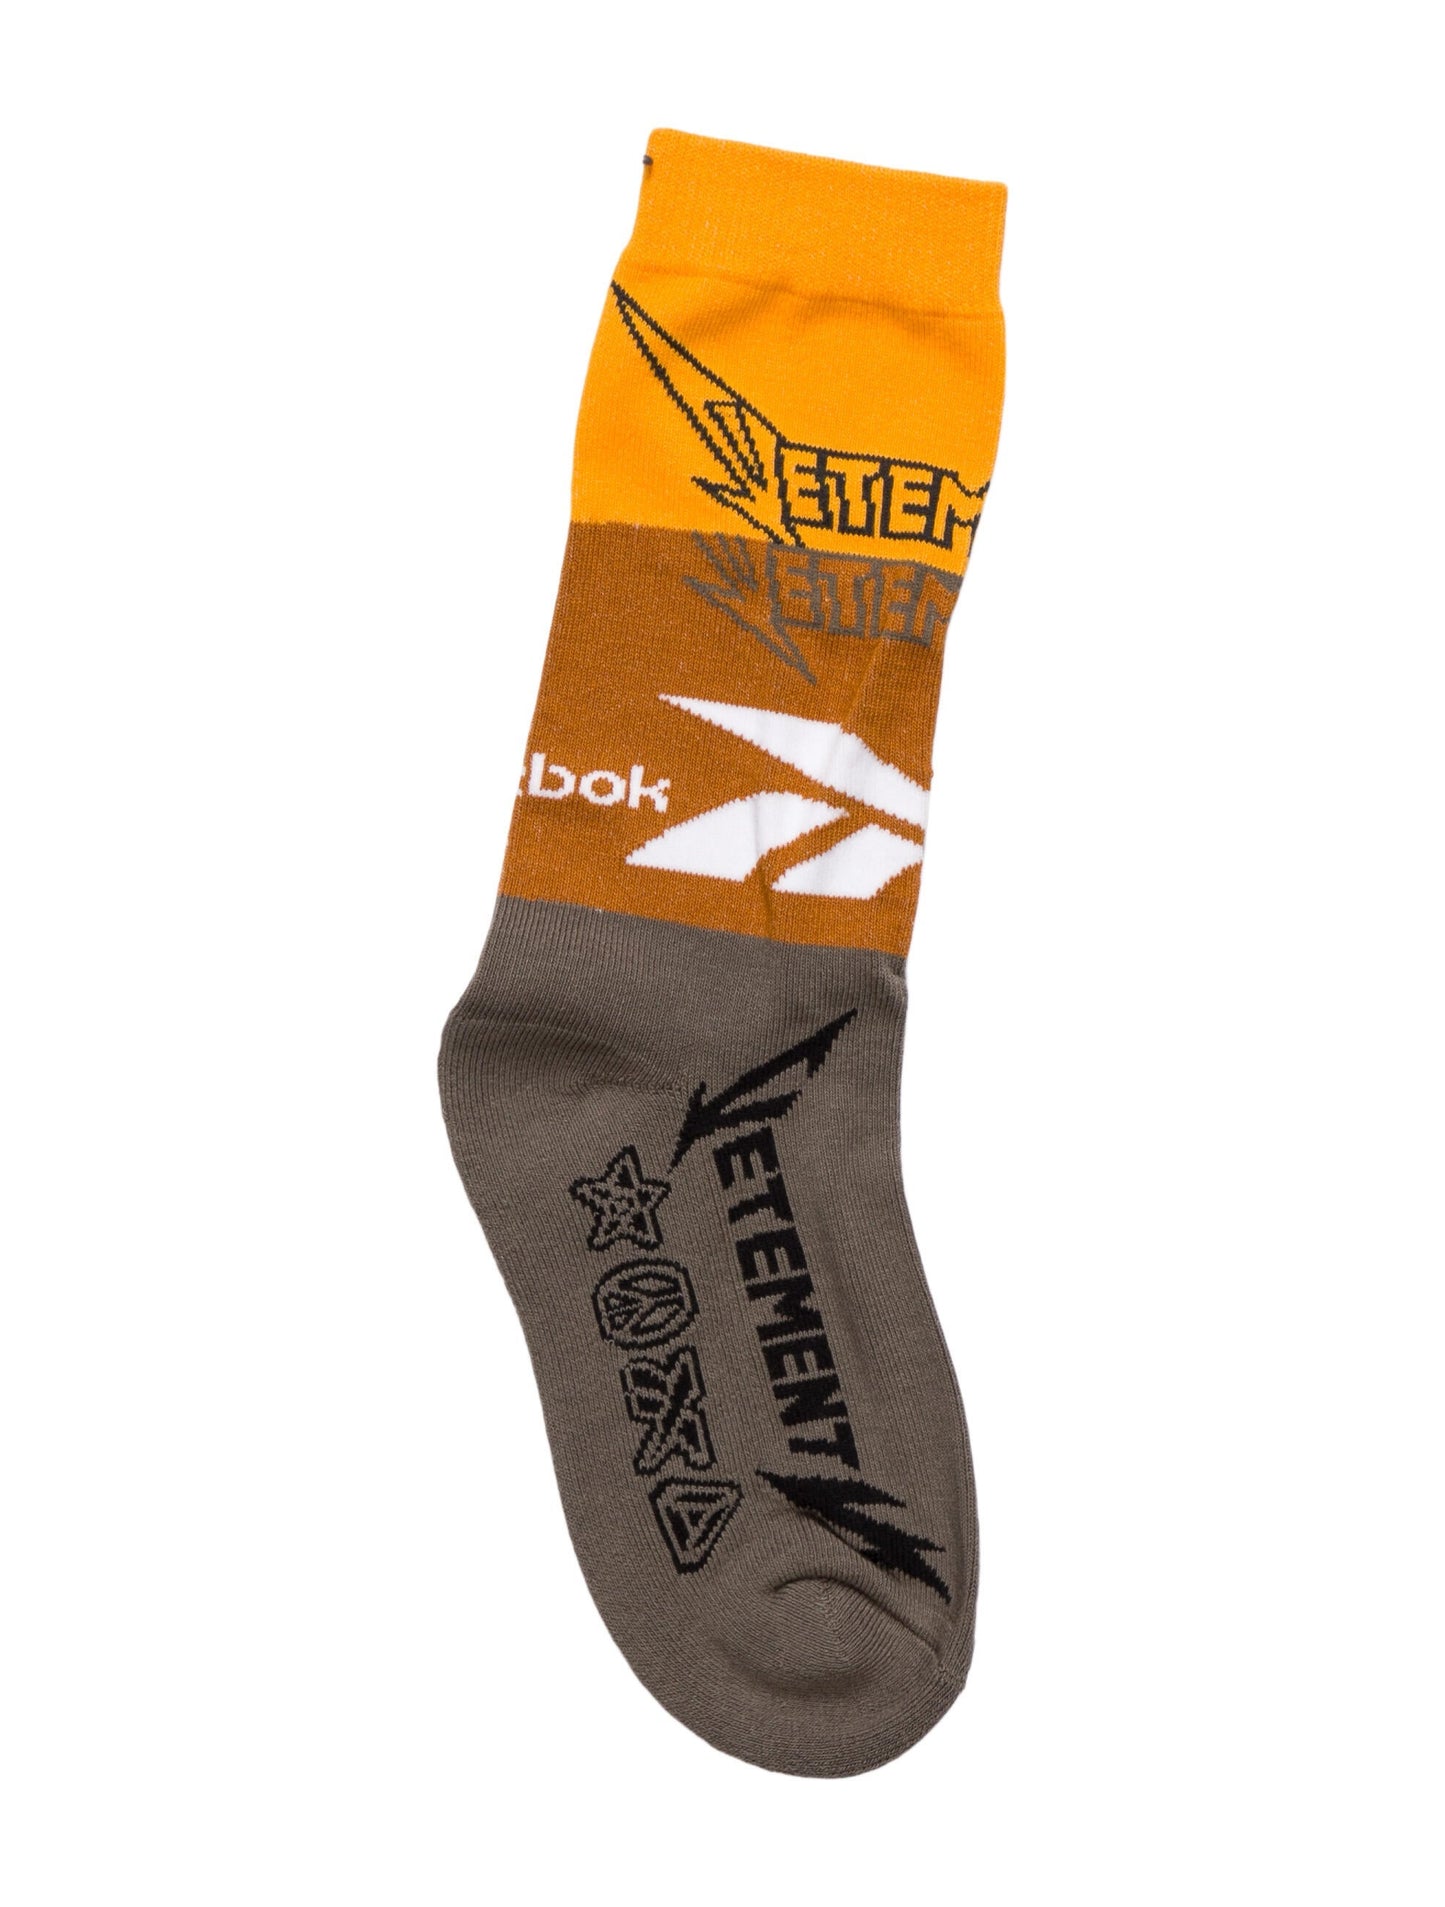 Чорапи Vetem.&Sport Yellow Cut UP-Clothing-Thedresscode